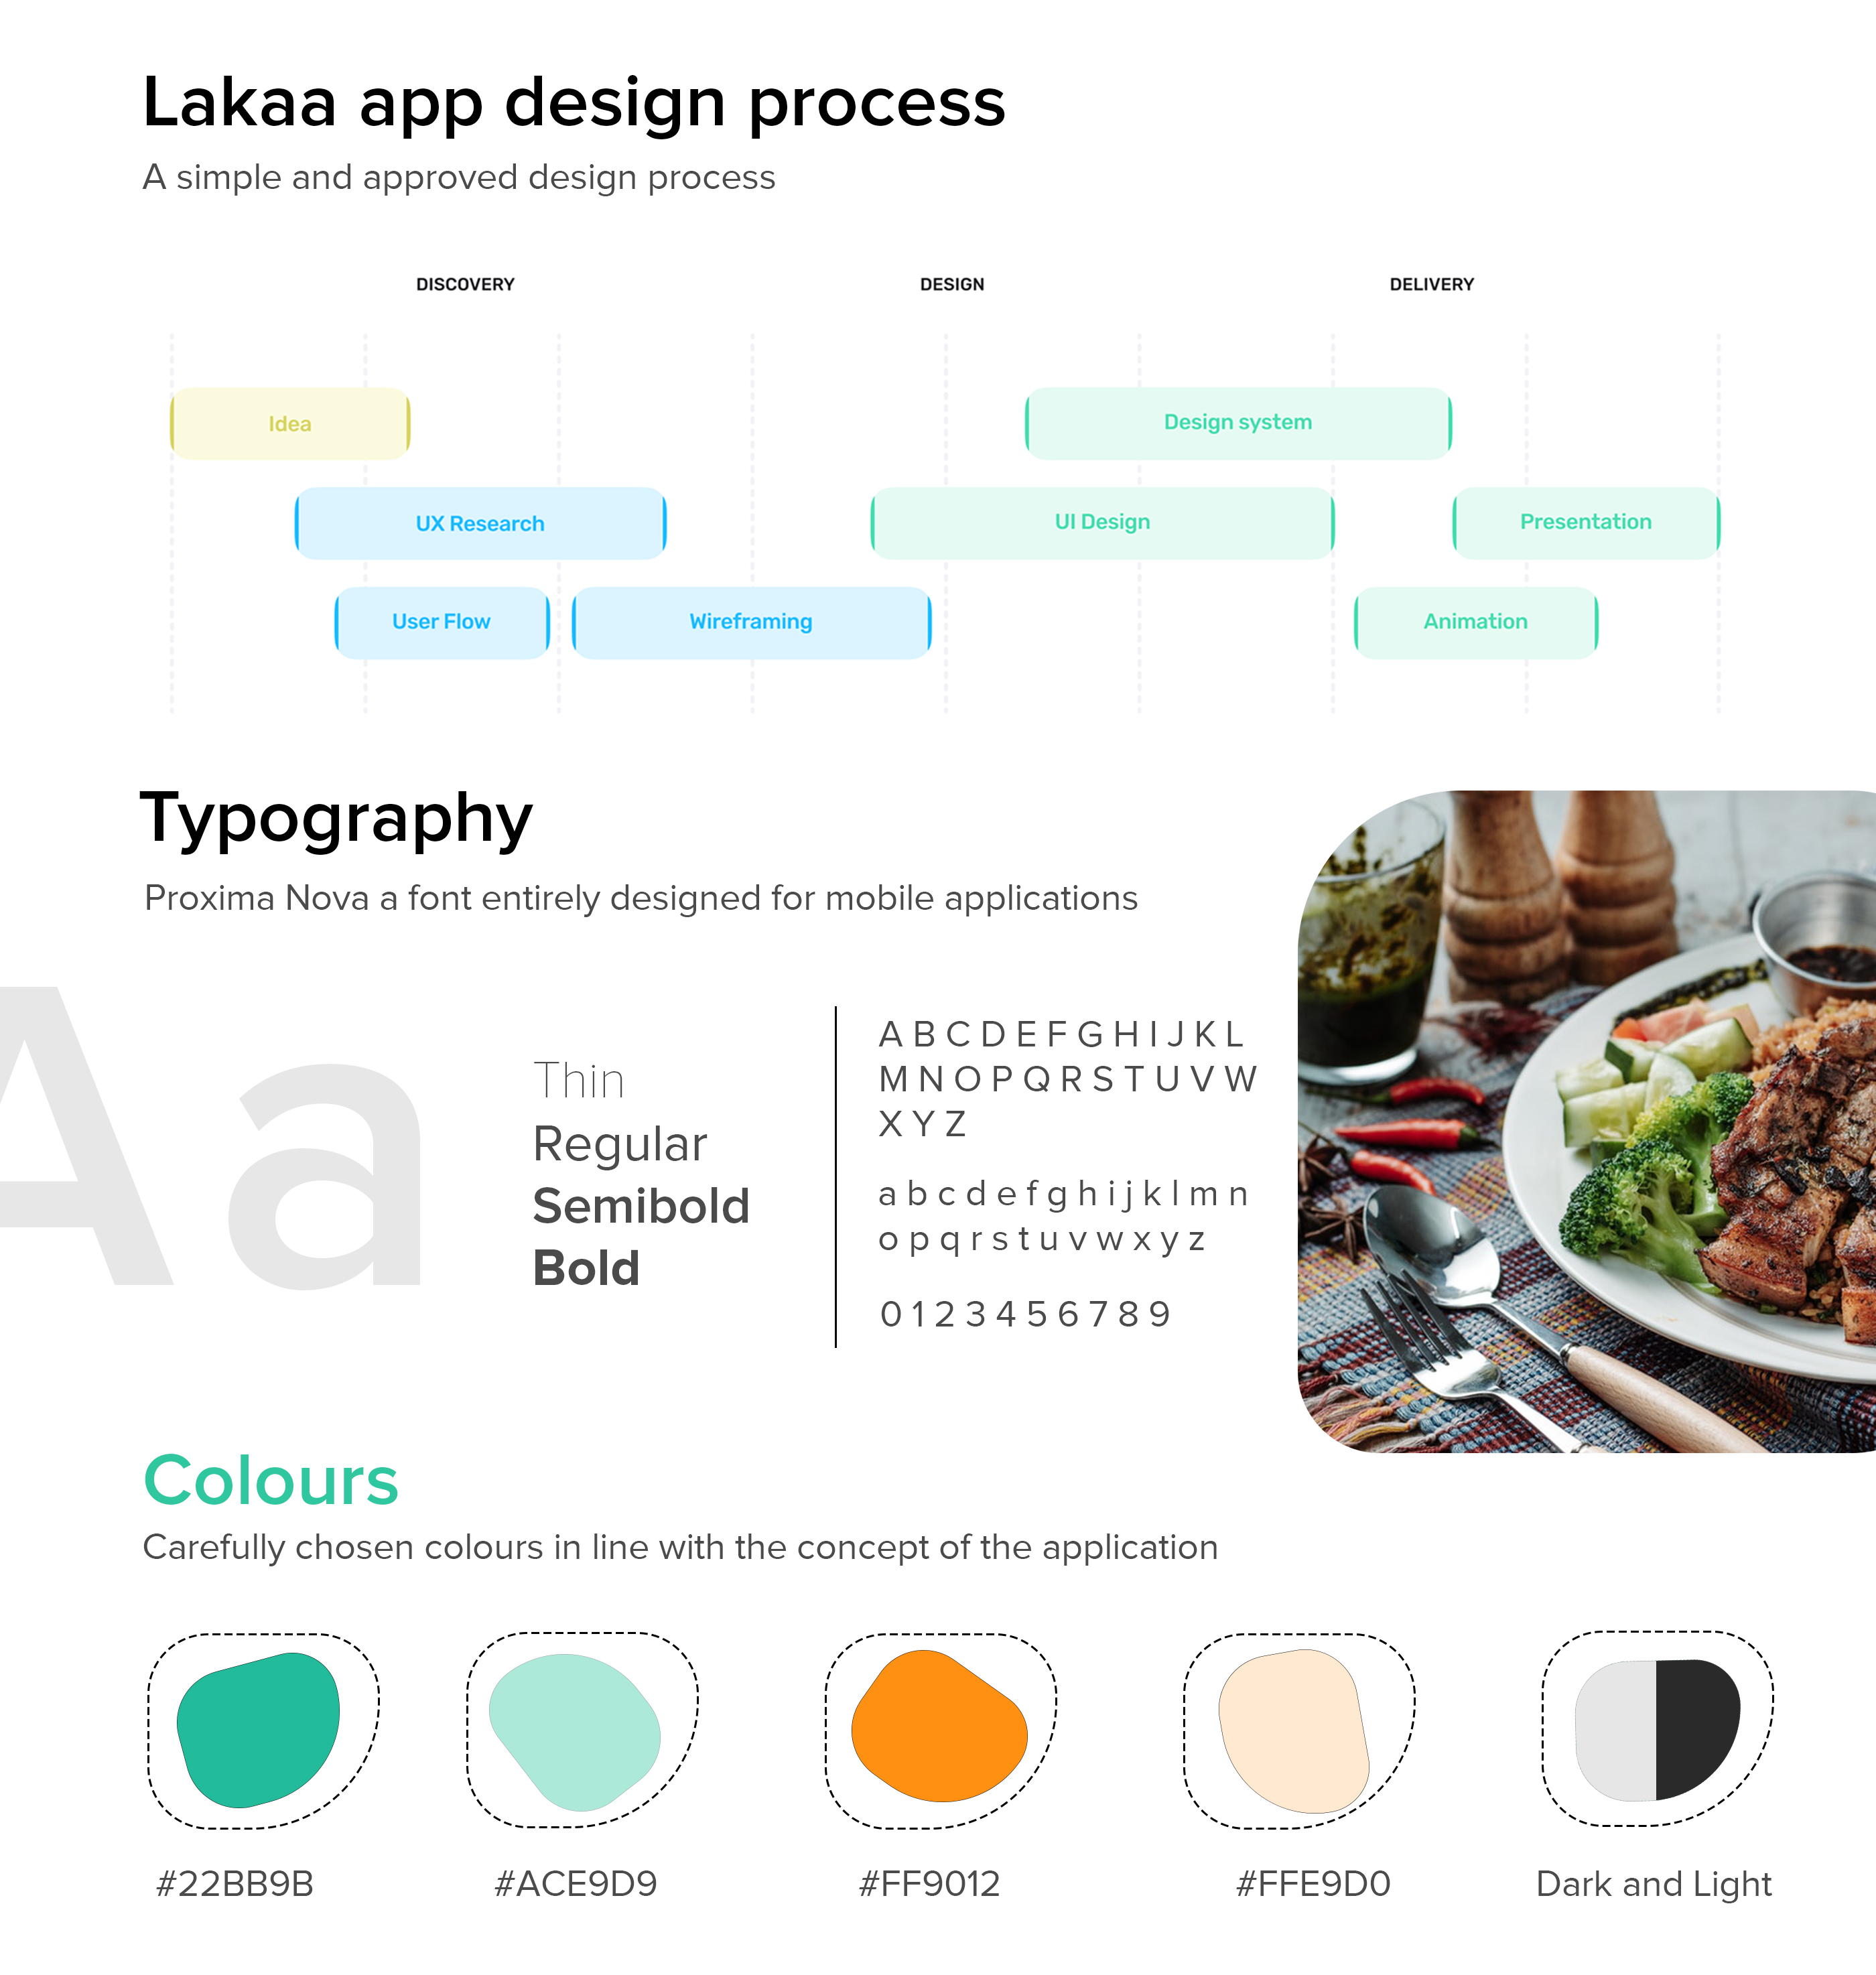 Lakaa food delivery app design process - flutter ui kit design